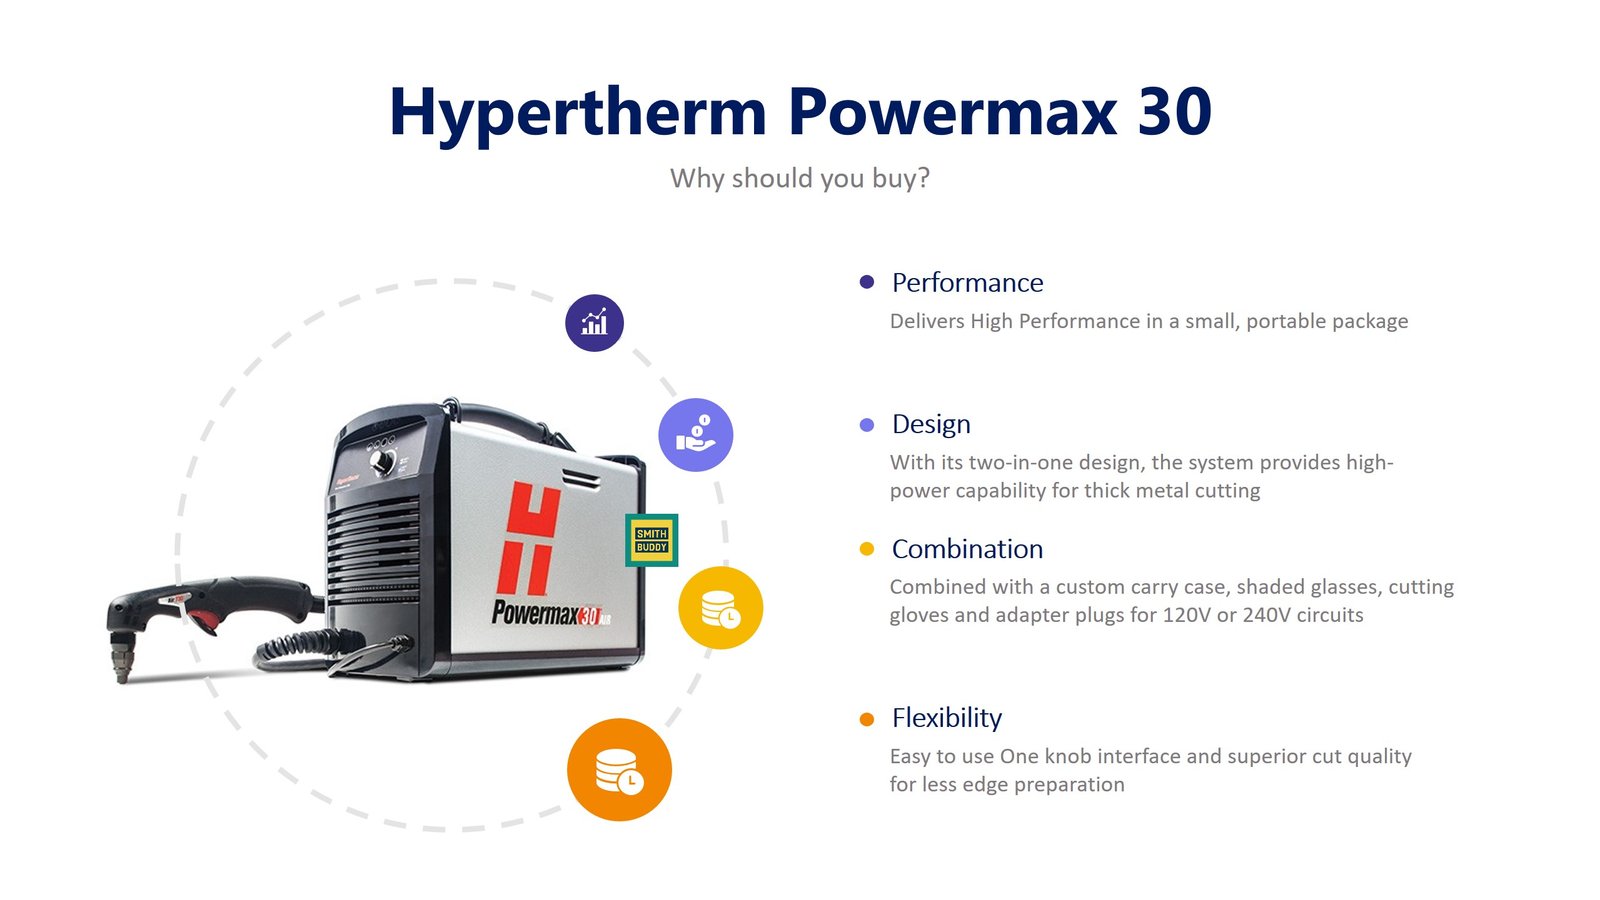 Why should you buy Hypertherm Powermax 30